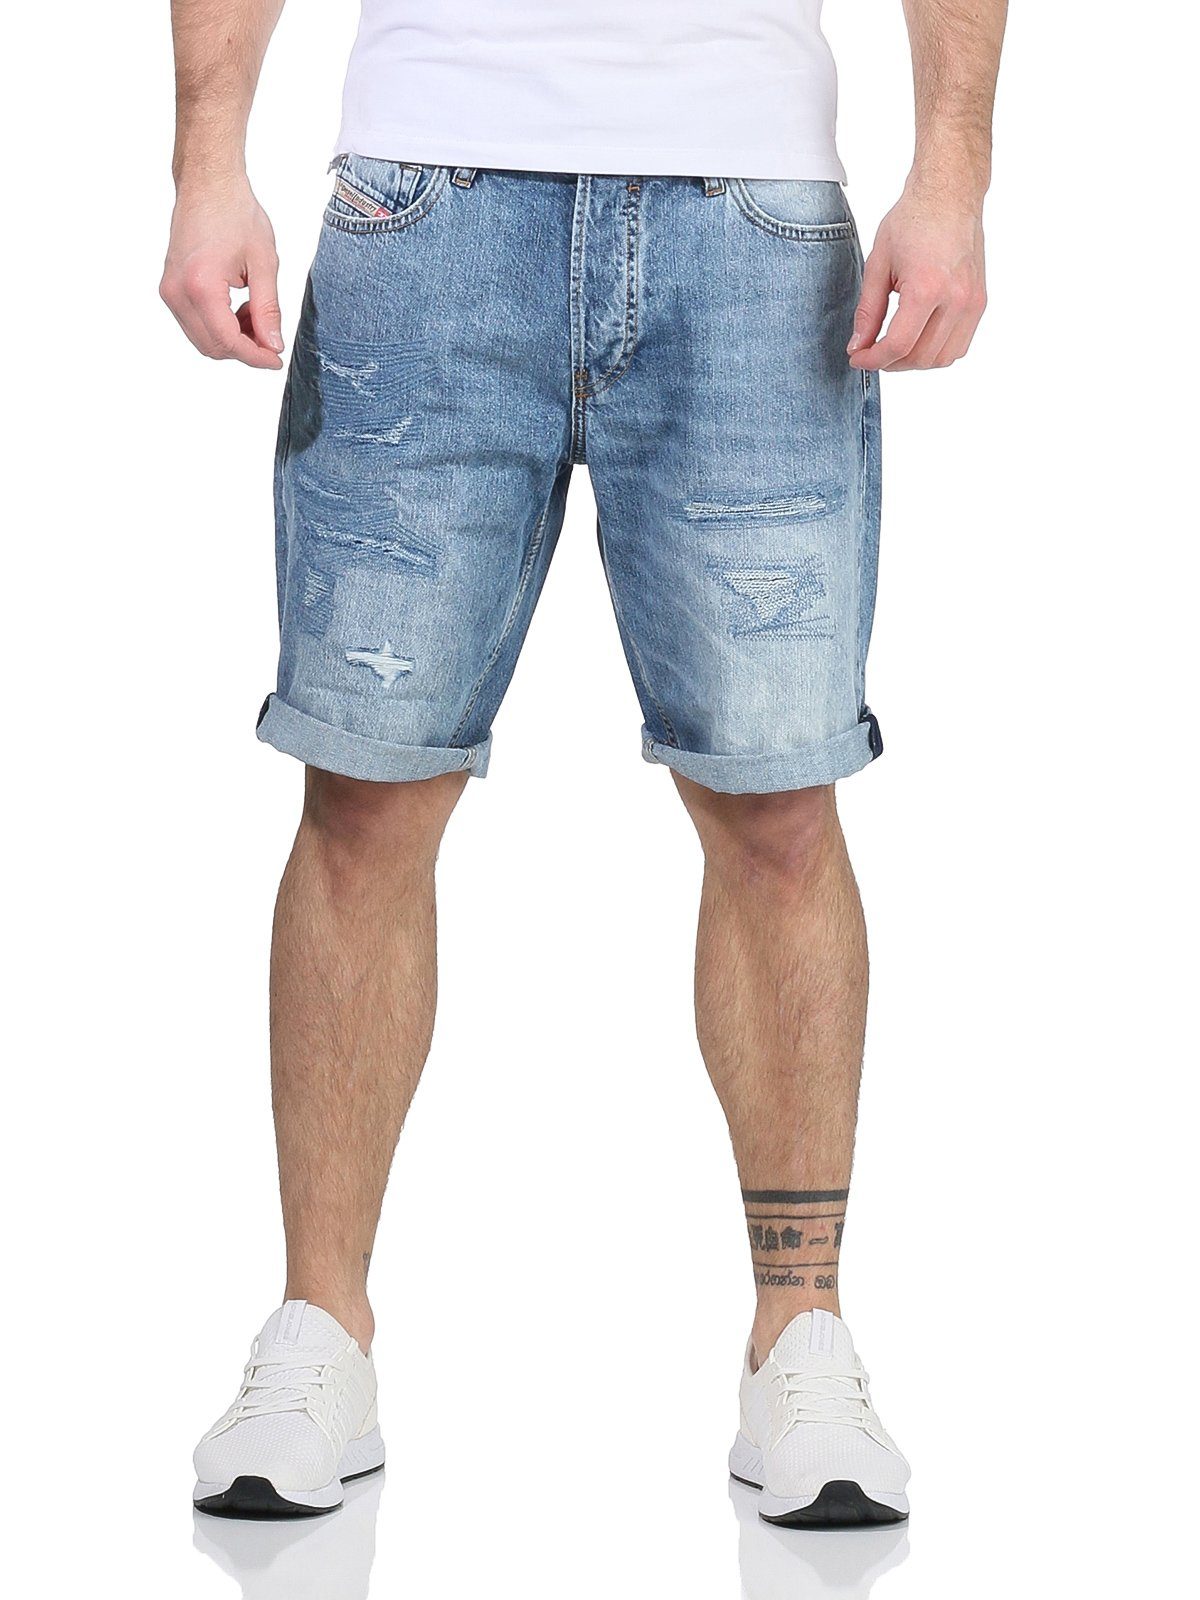 Look Herren Blau kurze Diesel Kroshort Used-Look RG48R Shorts, Shorts Hose Vintage Jeans Jeansshorts dezenter RB012